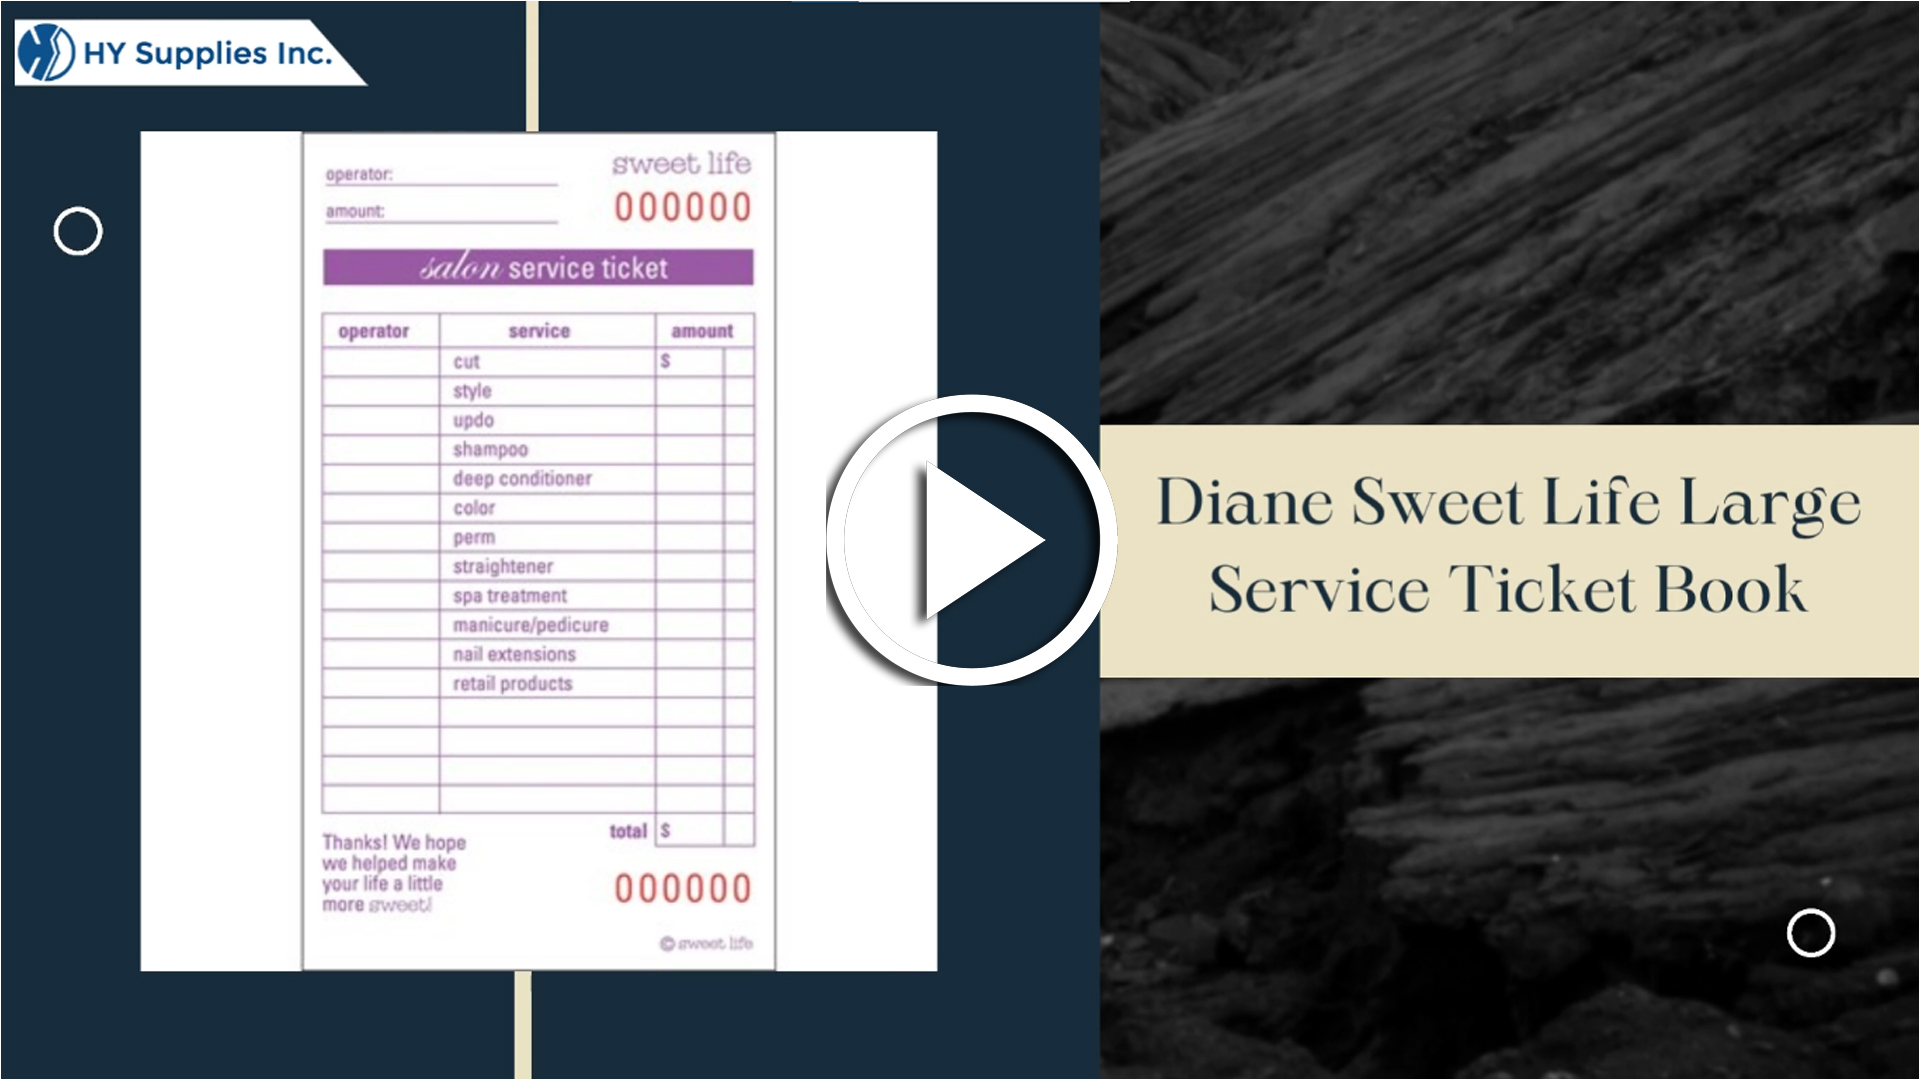 Diane Sweet Life Large Service Ticket Book